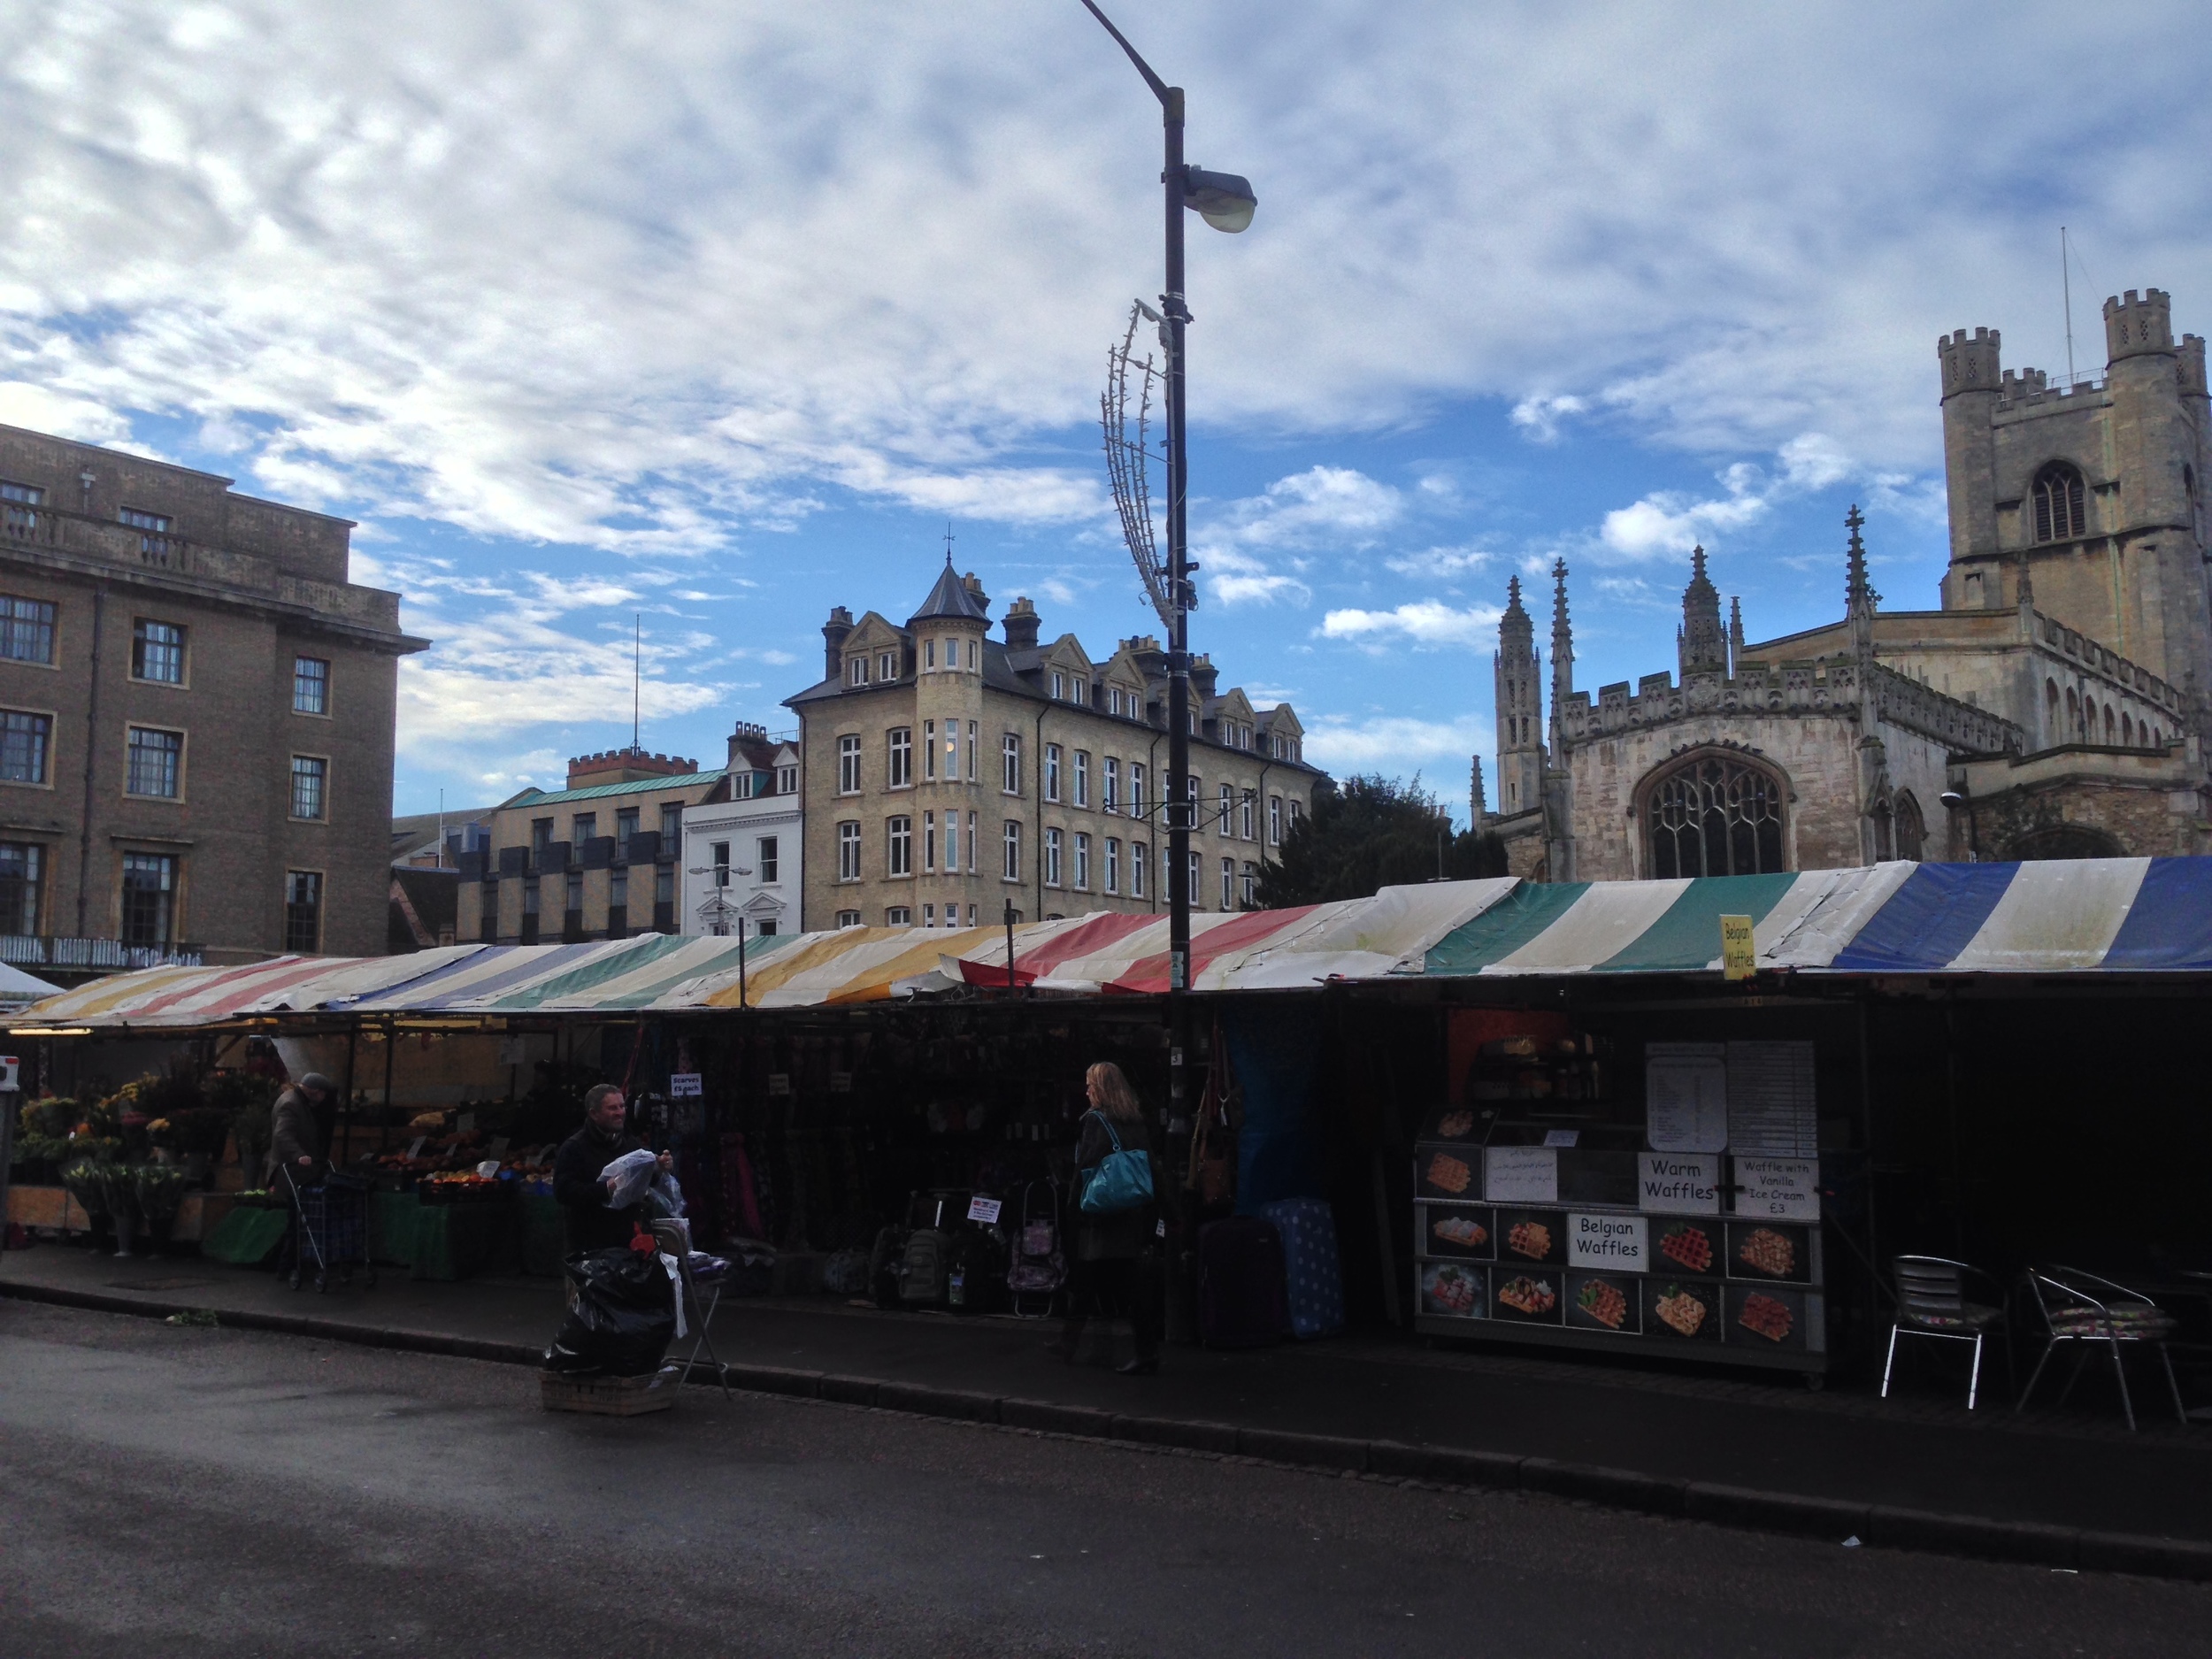  The Market Square - Cambridge, UK 